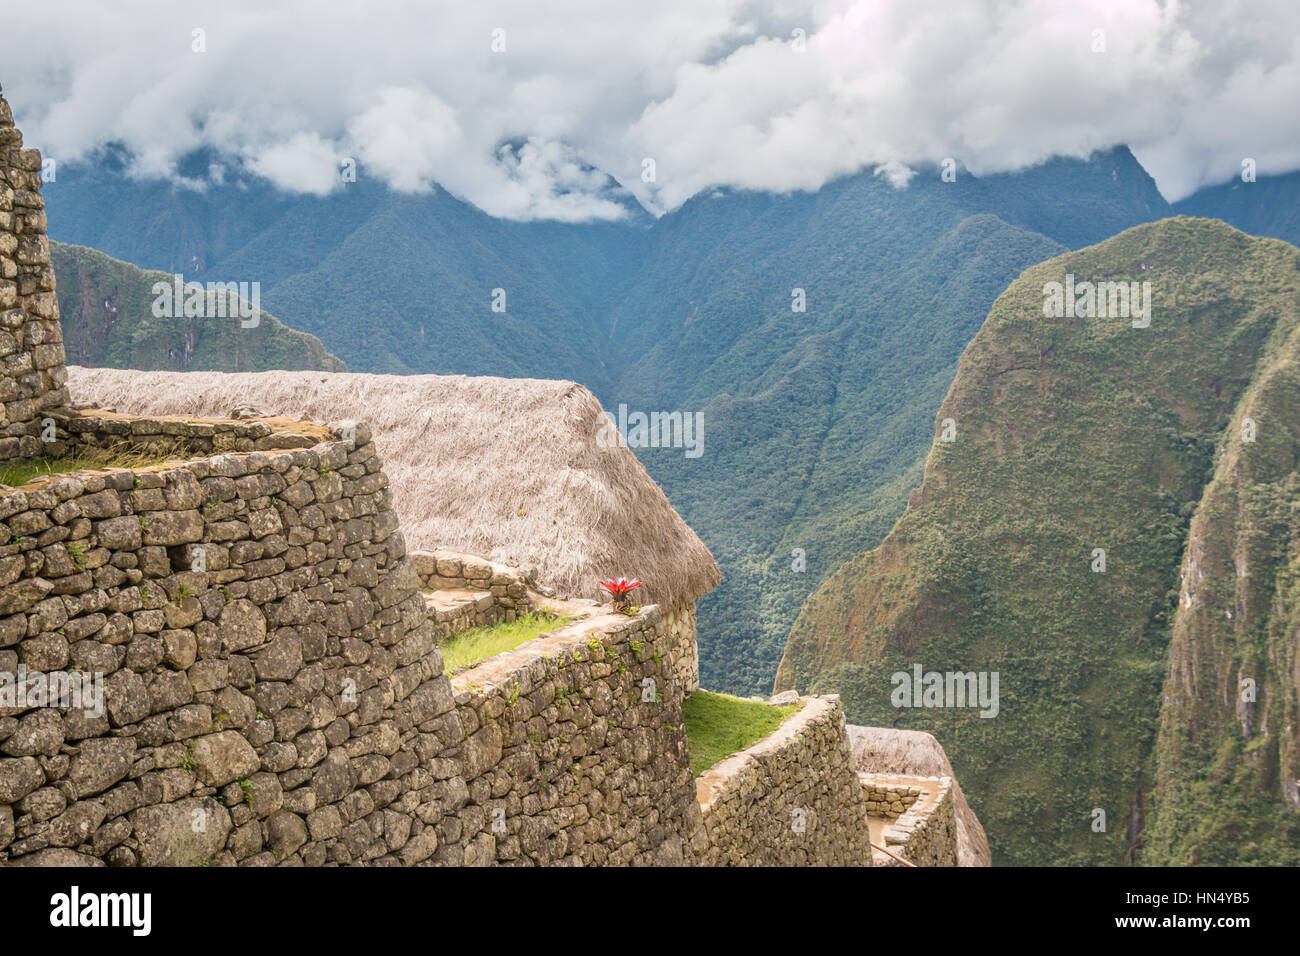 Machu Picchu ruins Stock Photo